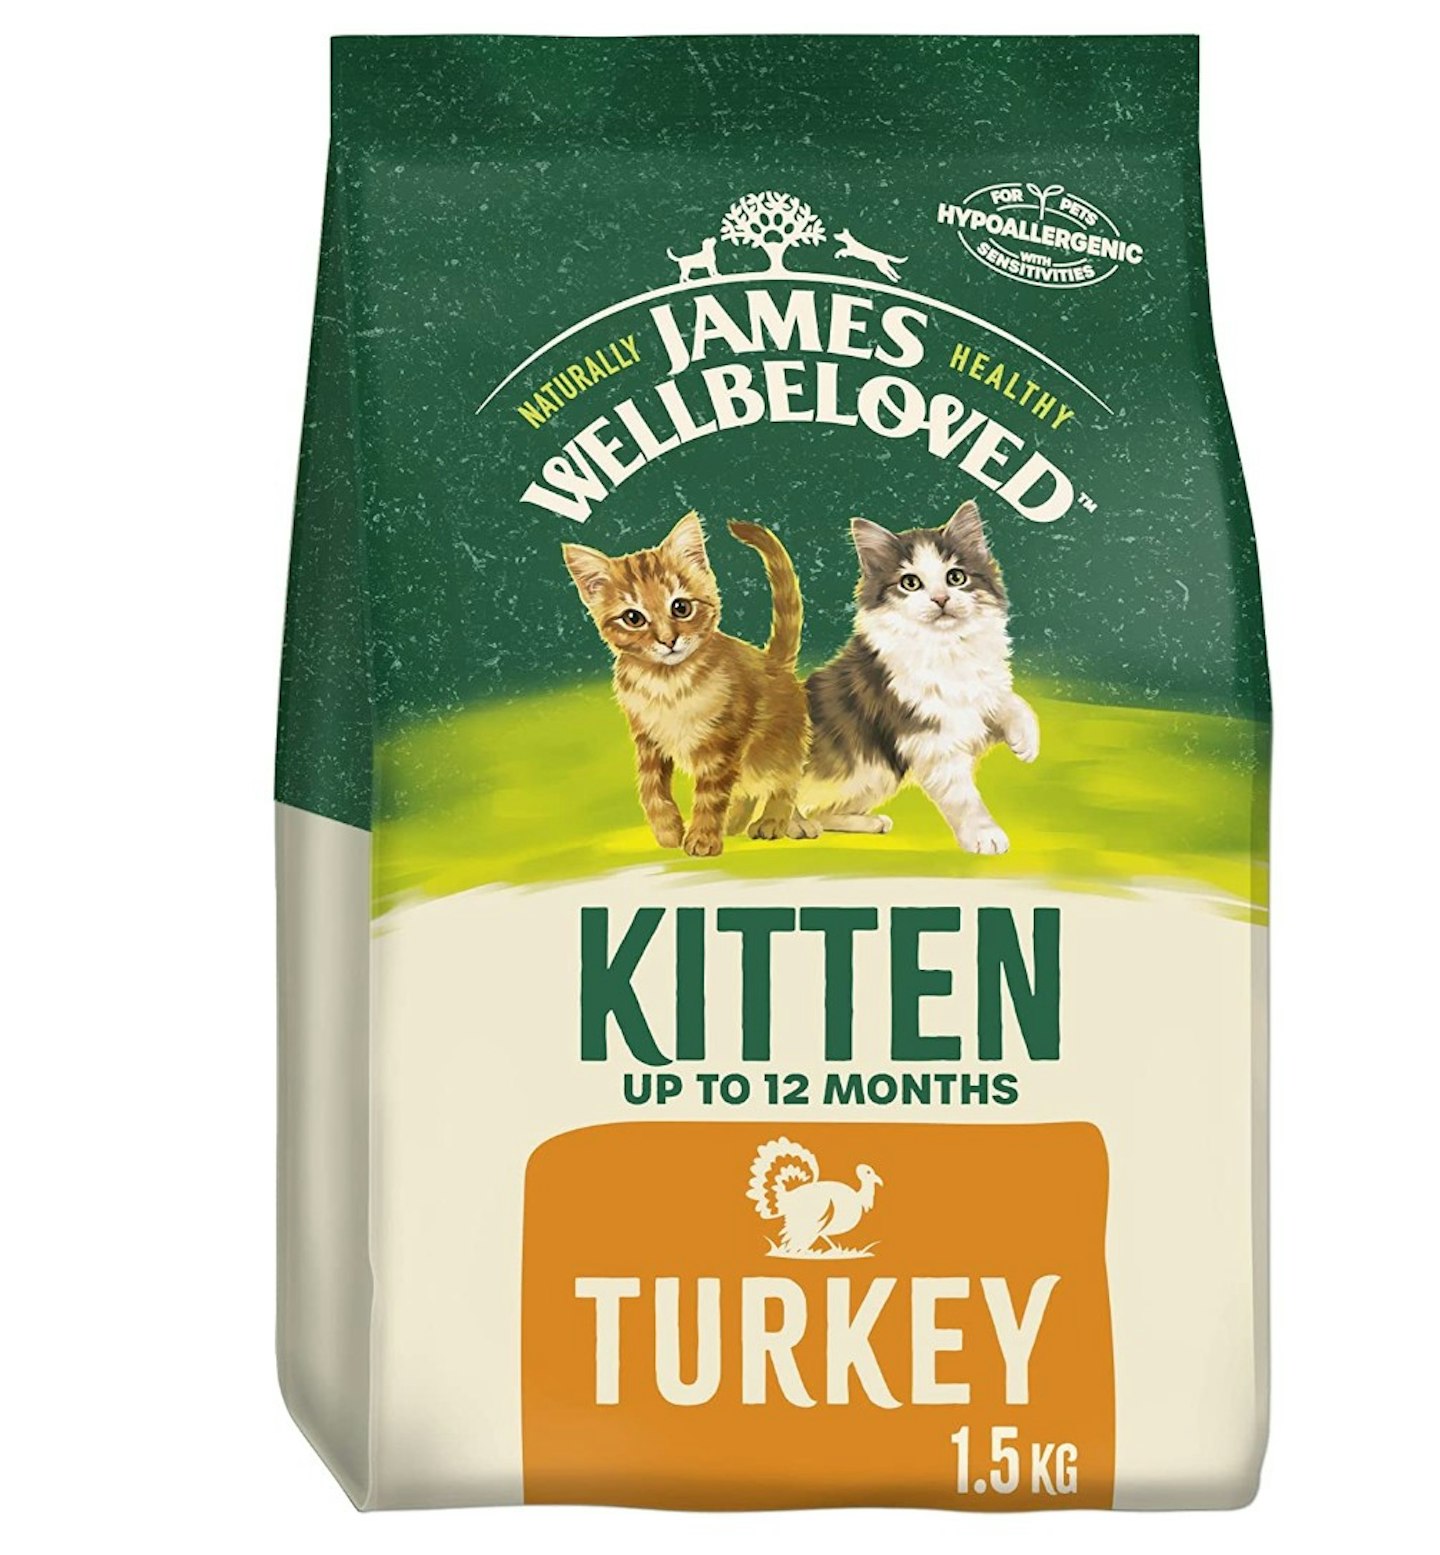  James Wellbeloved Kitten Turkey 1.5 kg Bag, Hypoallergenic Dry Cat Food